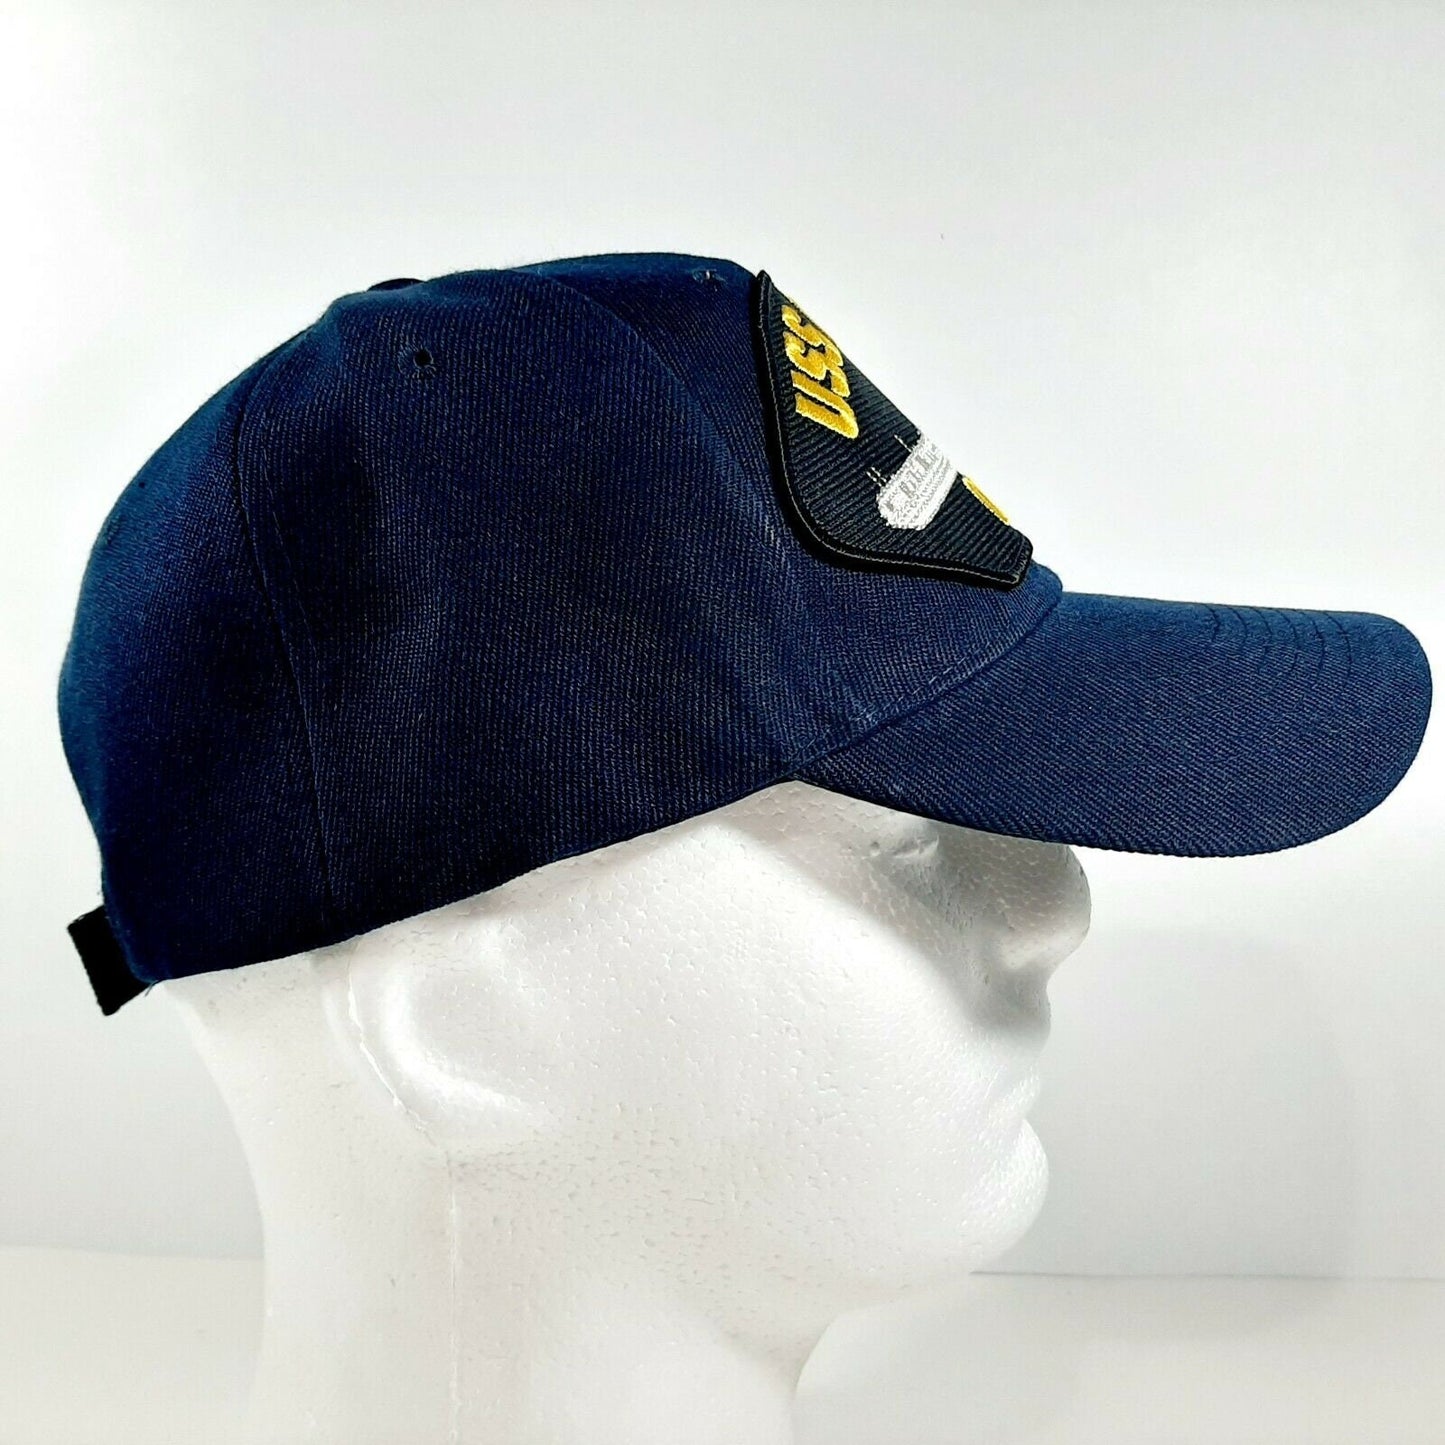 U.S. Navy USS Essex CV-9 Men's Cap Patch Hat Navy Blue Acrylic